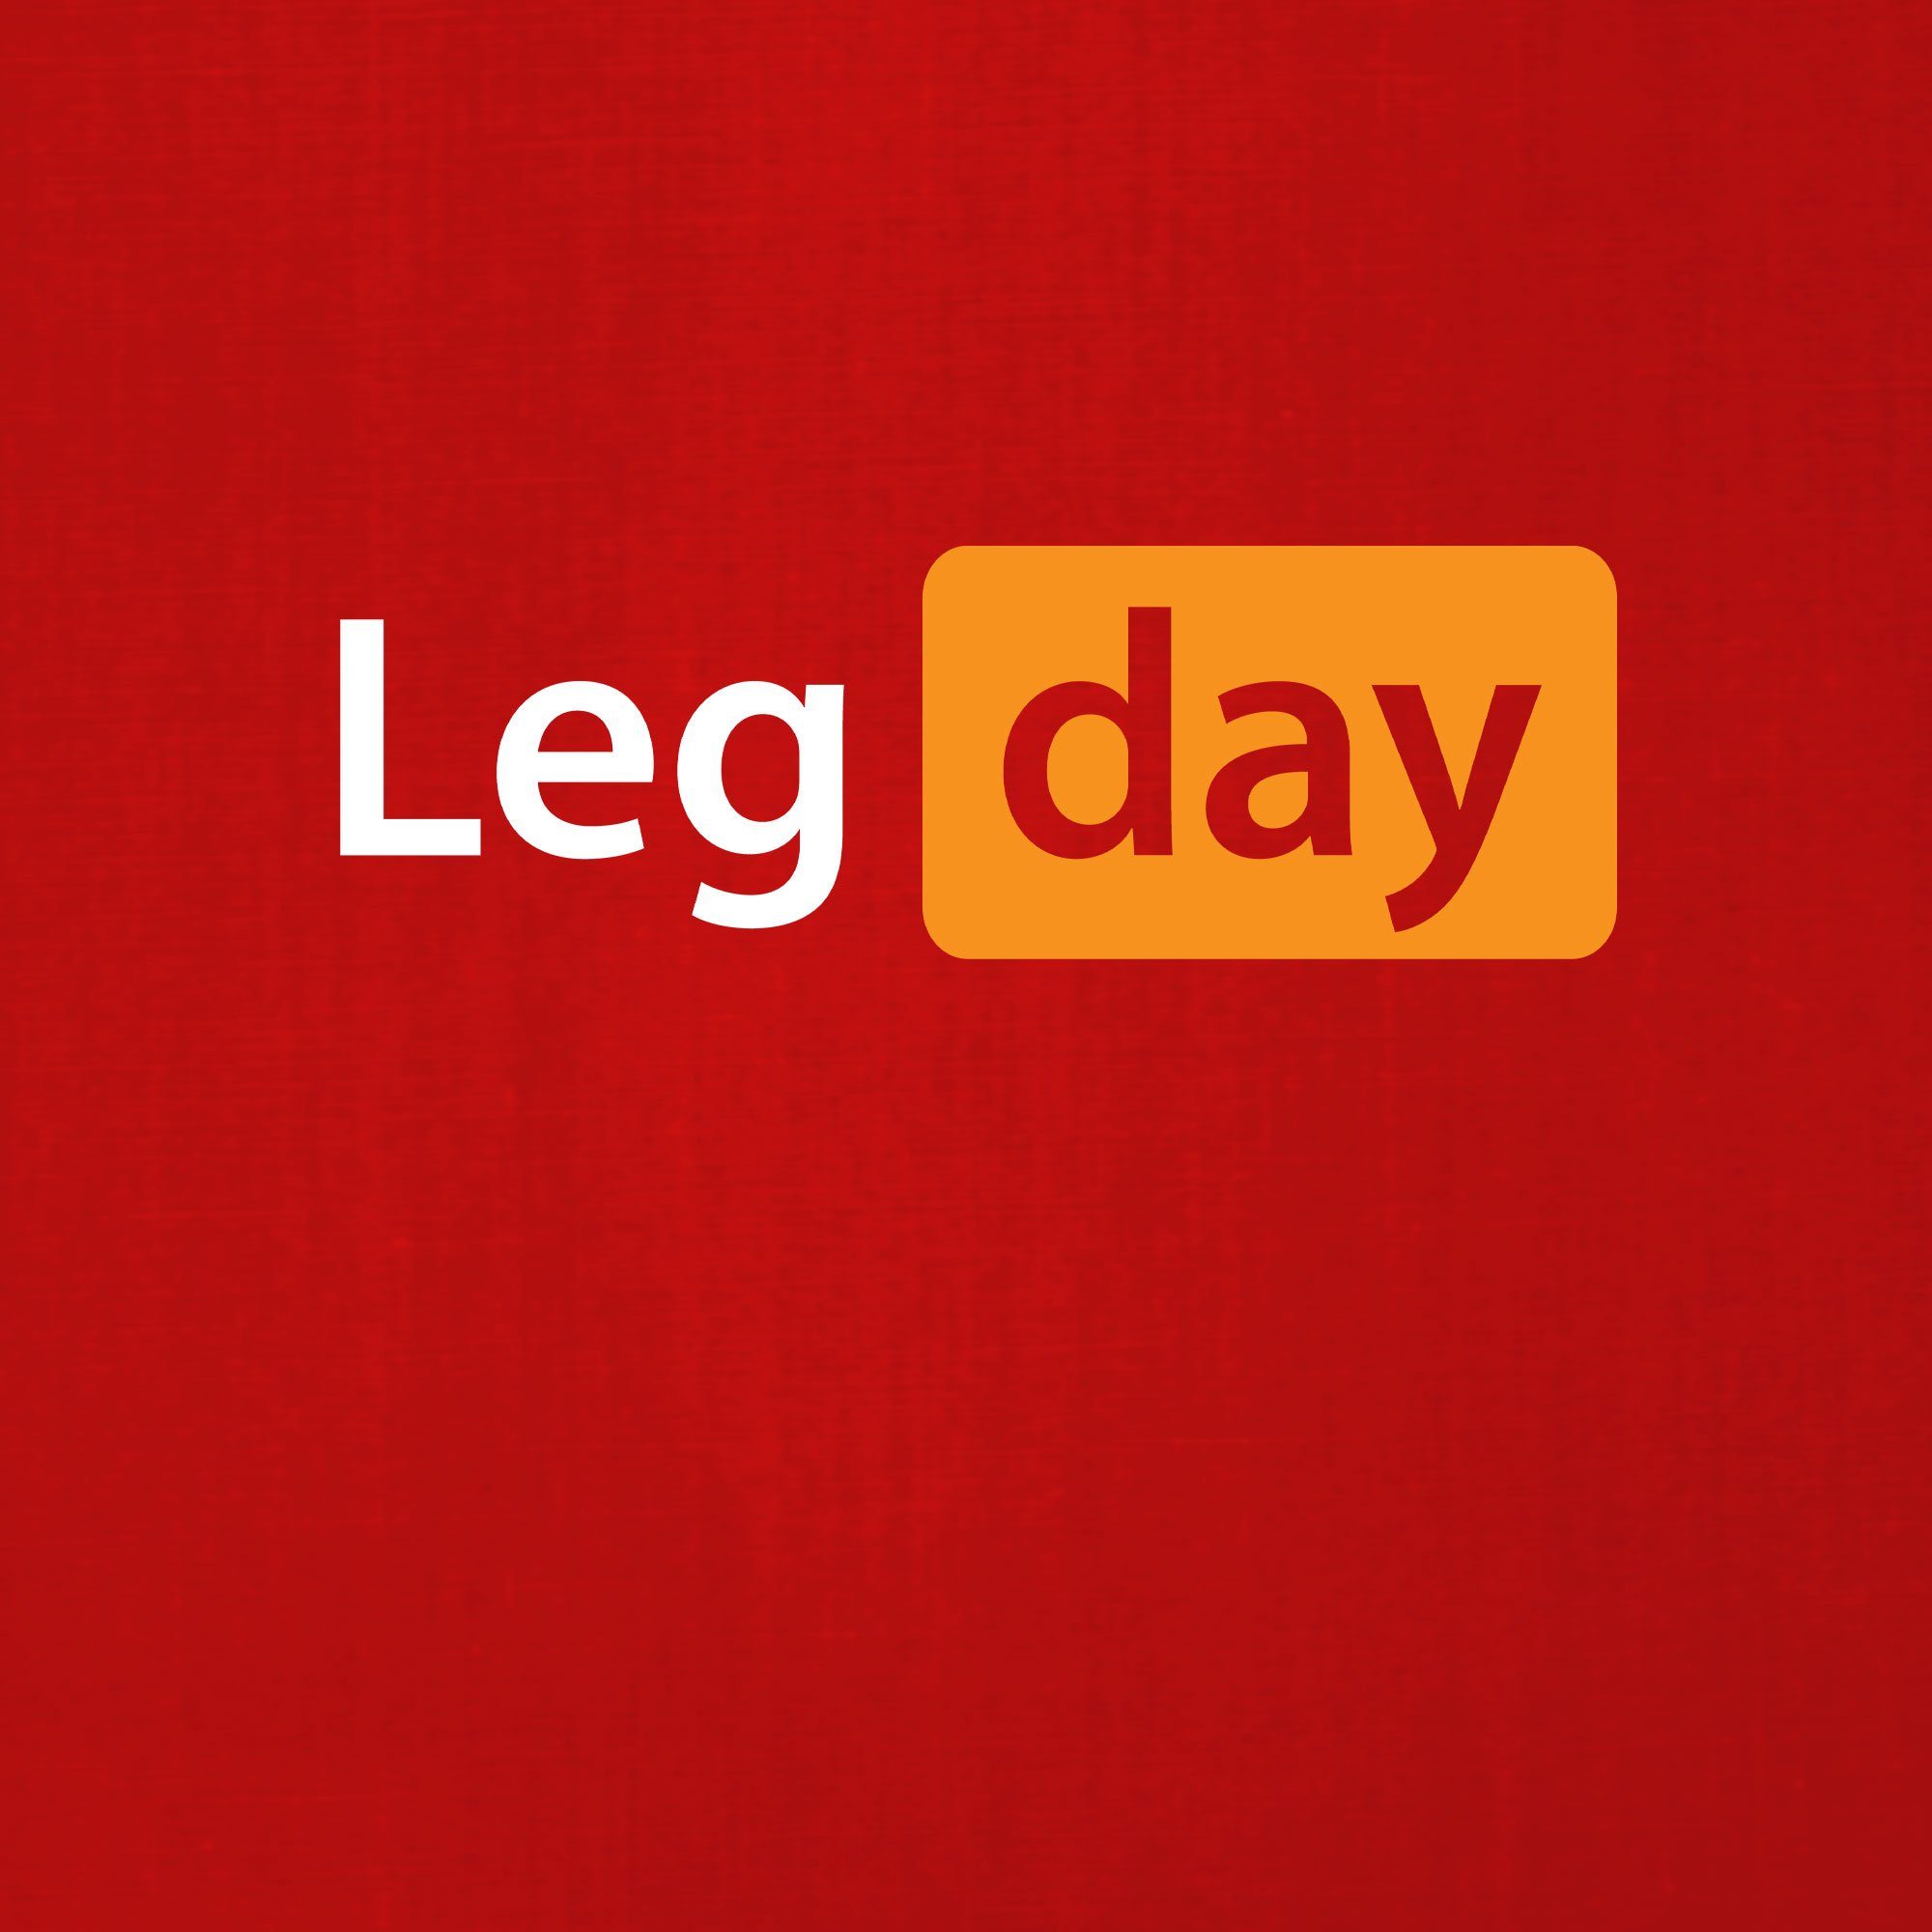 Herren Kurzarmshirt Fitness - (1-tlg) Quattro Day T-Shirt Gym Workout Leg Rot Formatee